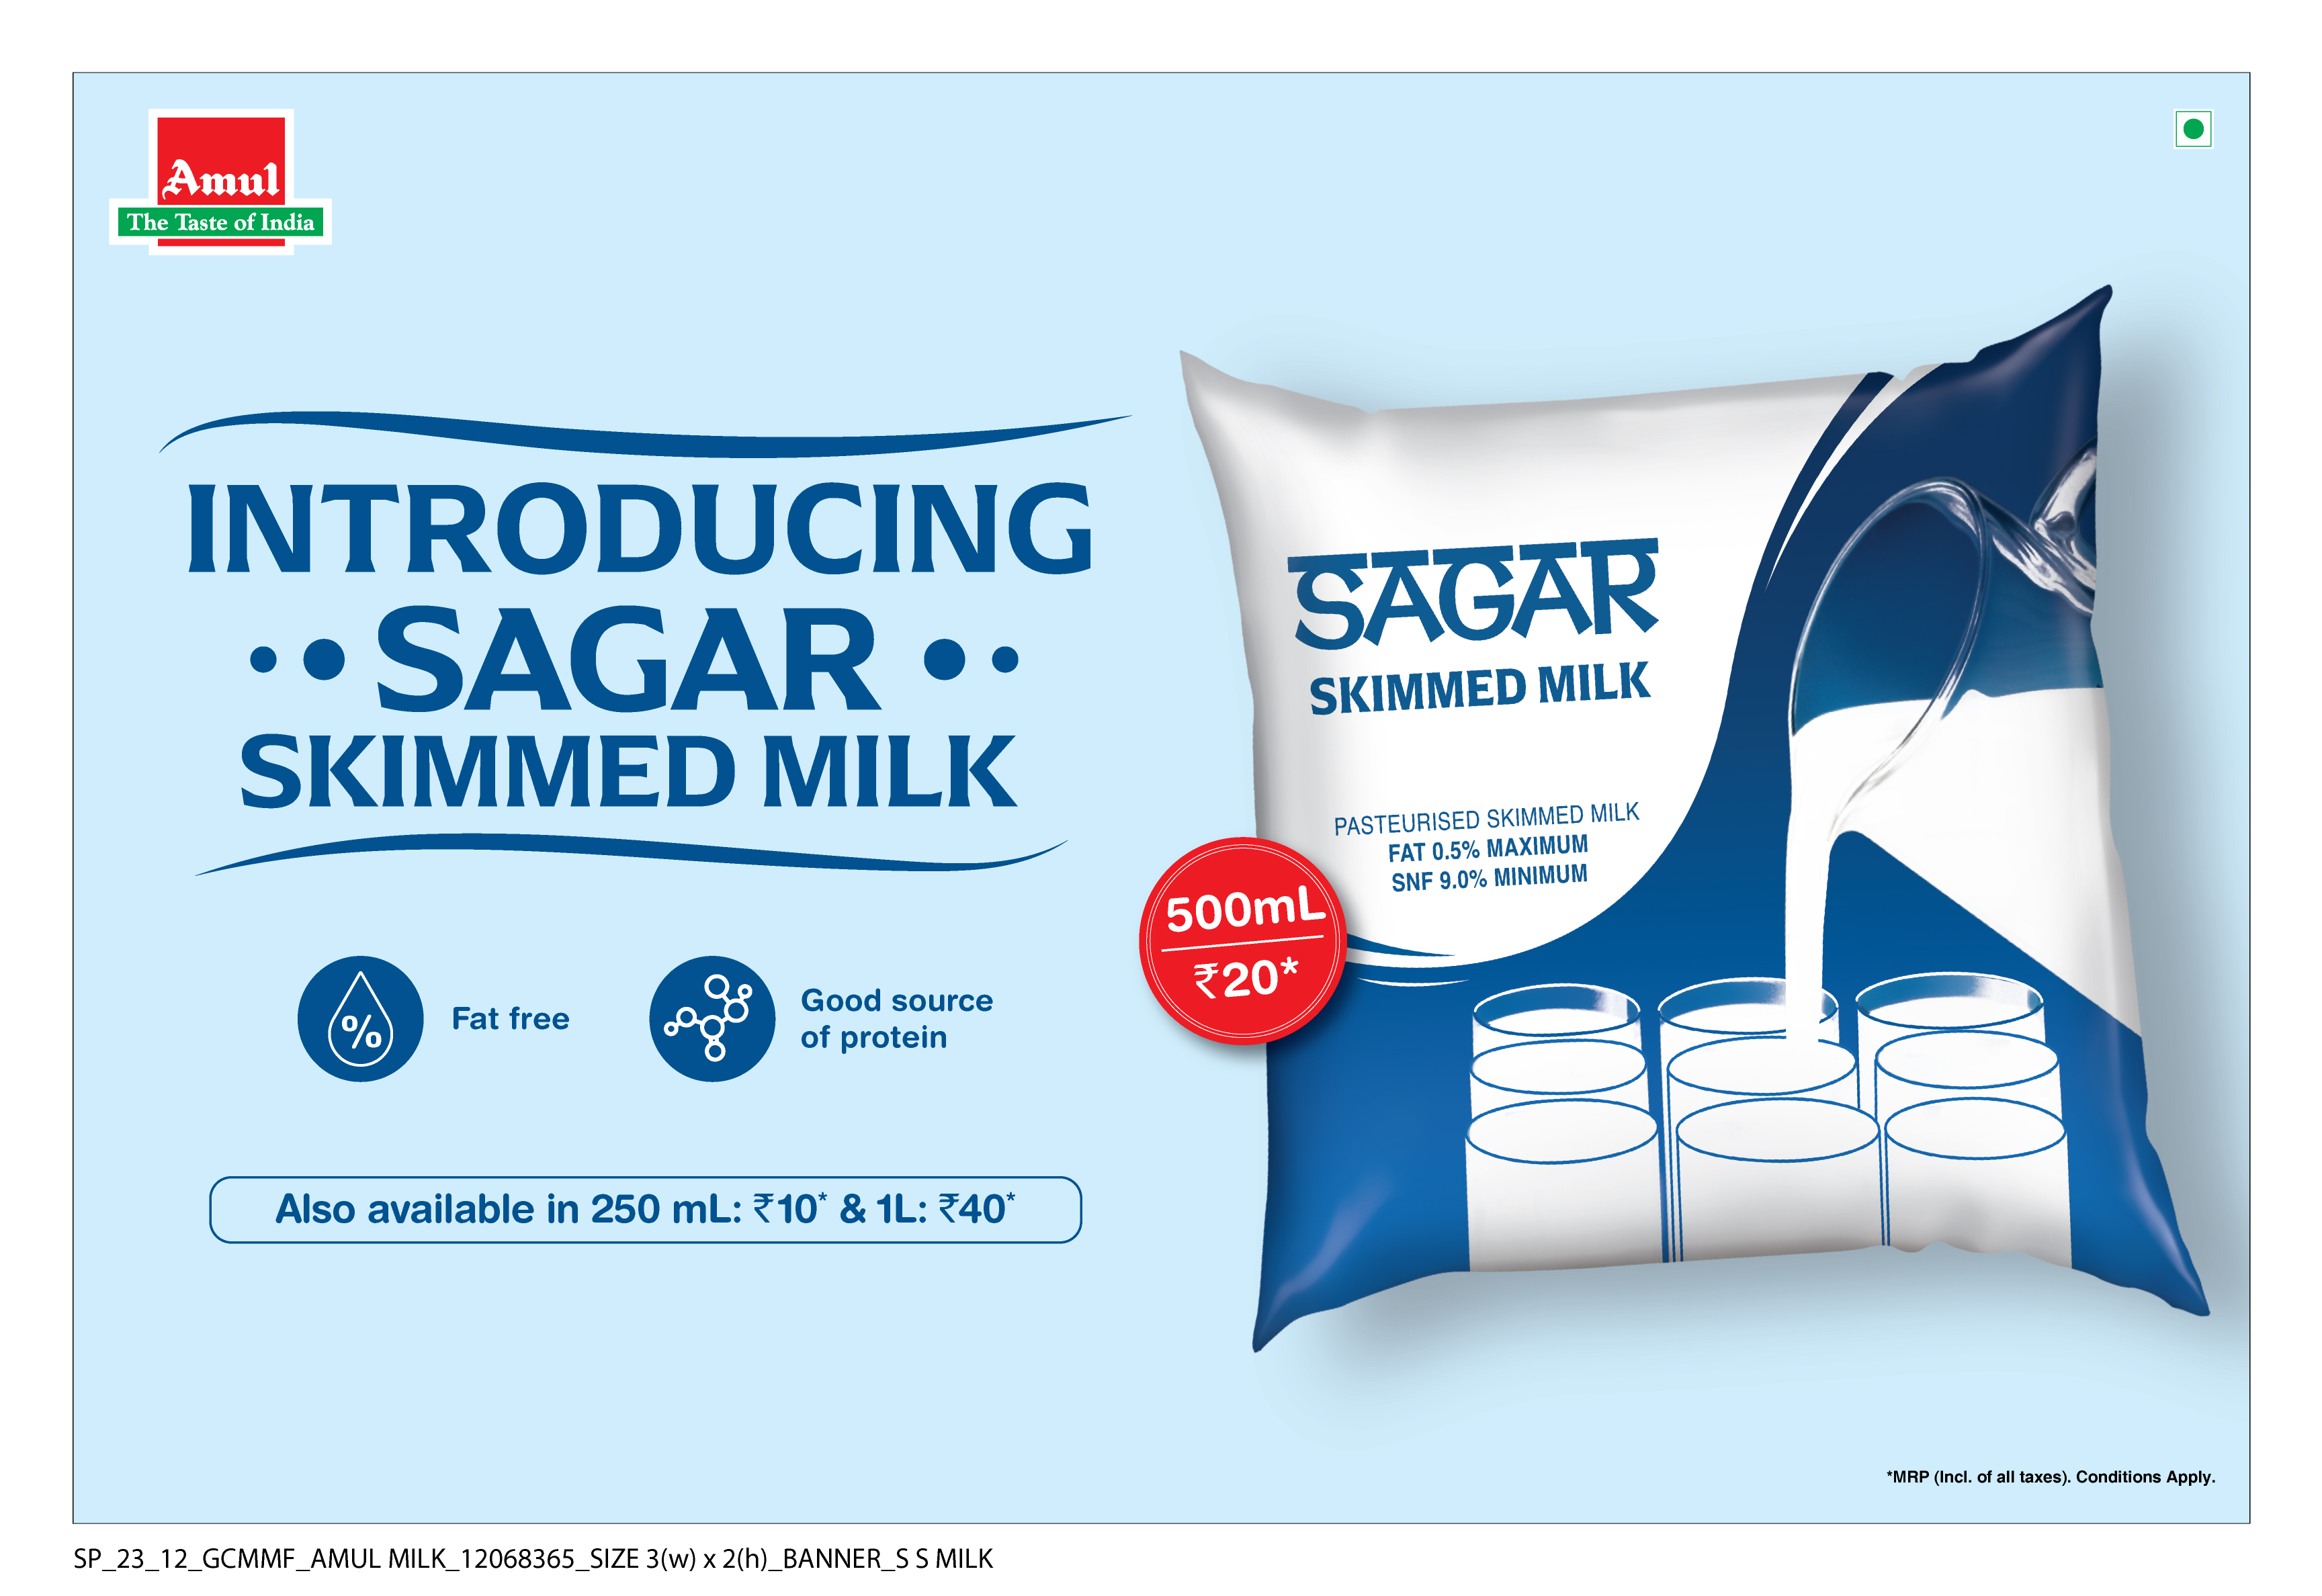 Sagar Skimmed Milk